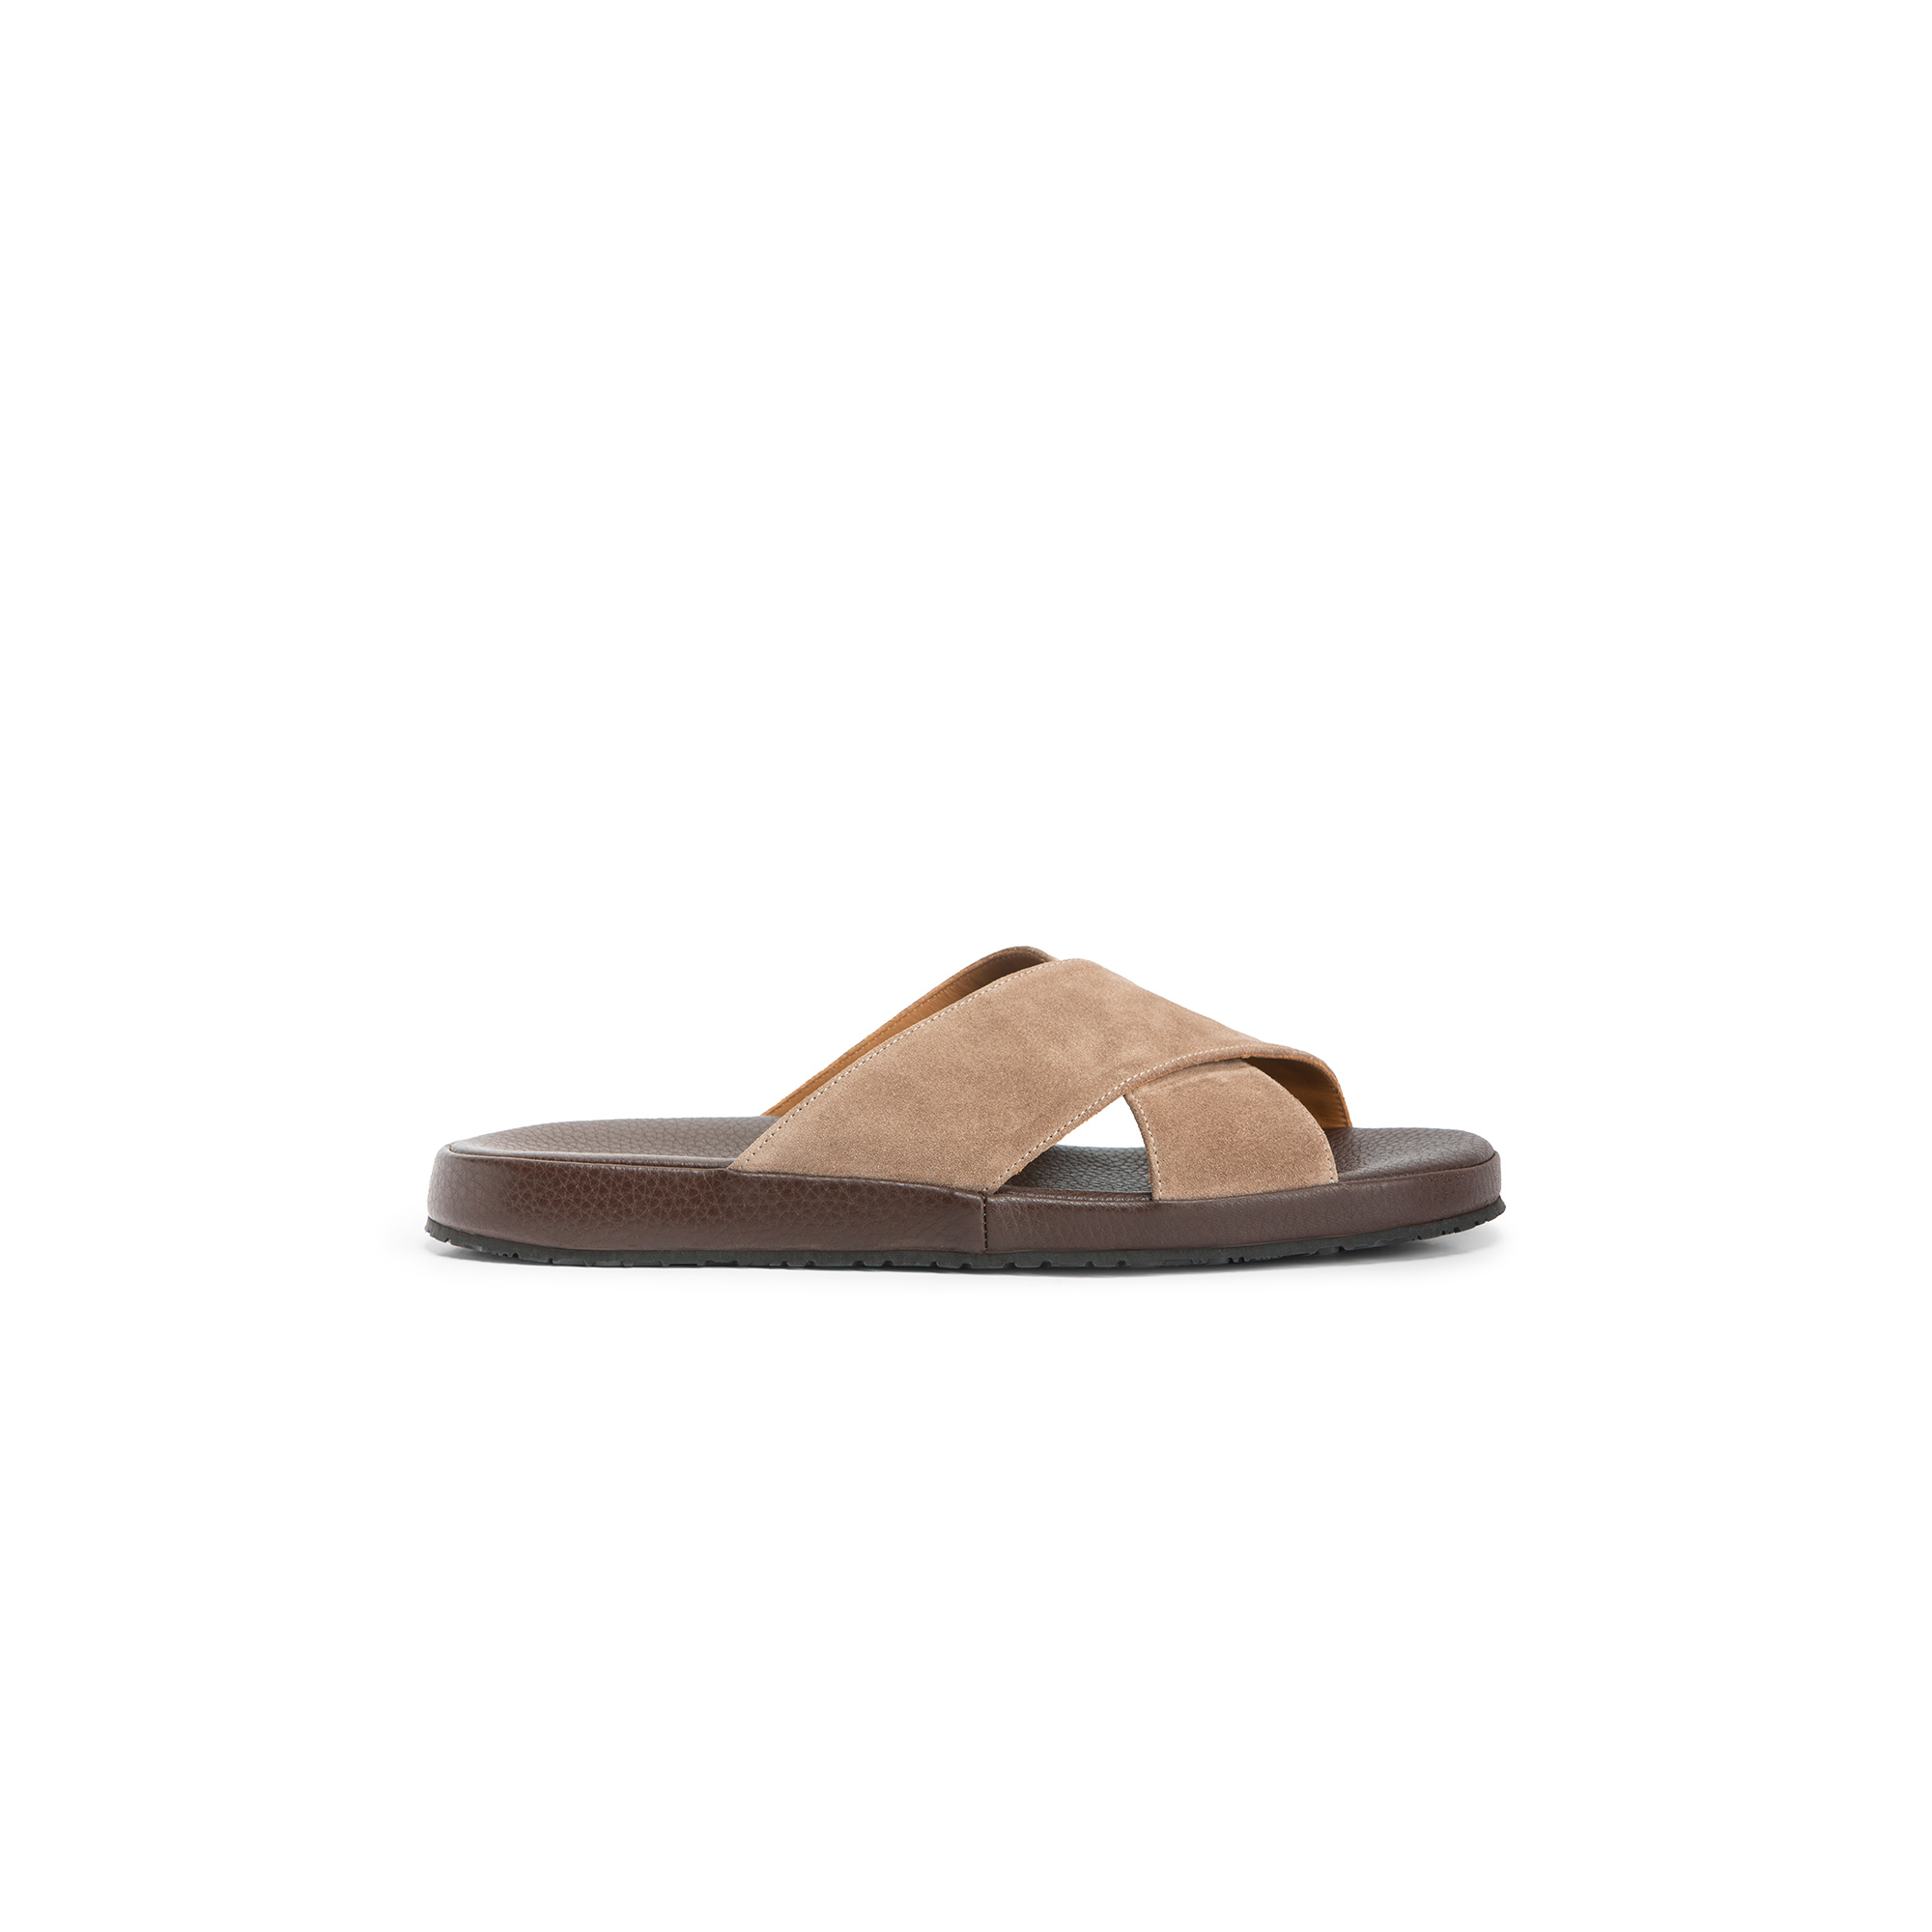 Outside shore and dark brown velour and deer leather sandal - Farfalla italian slippers